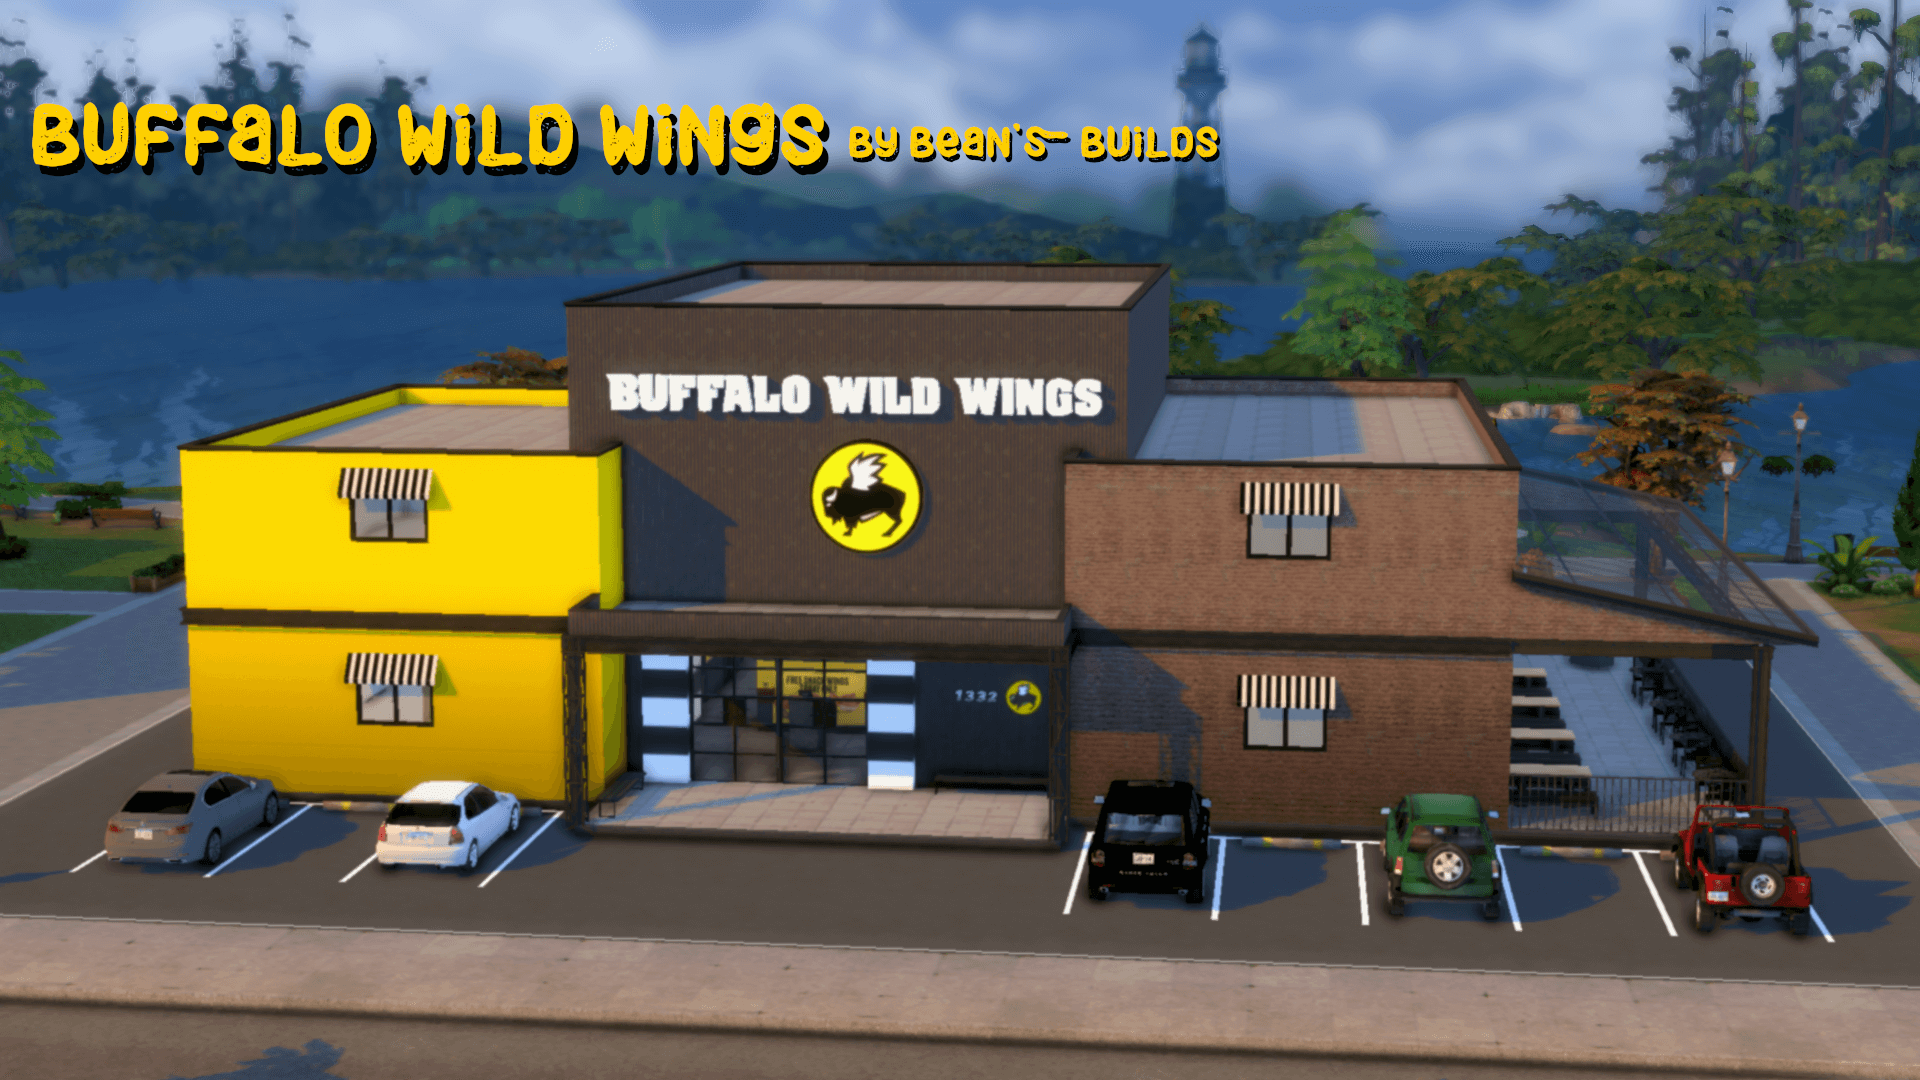 kuffert Fedt Shetland Sims 4 buffalo wild wings this build - MiCat Game